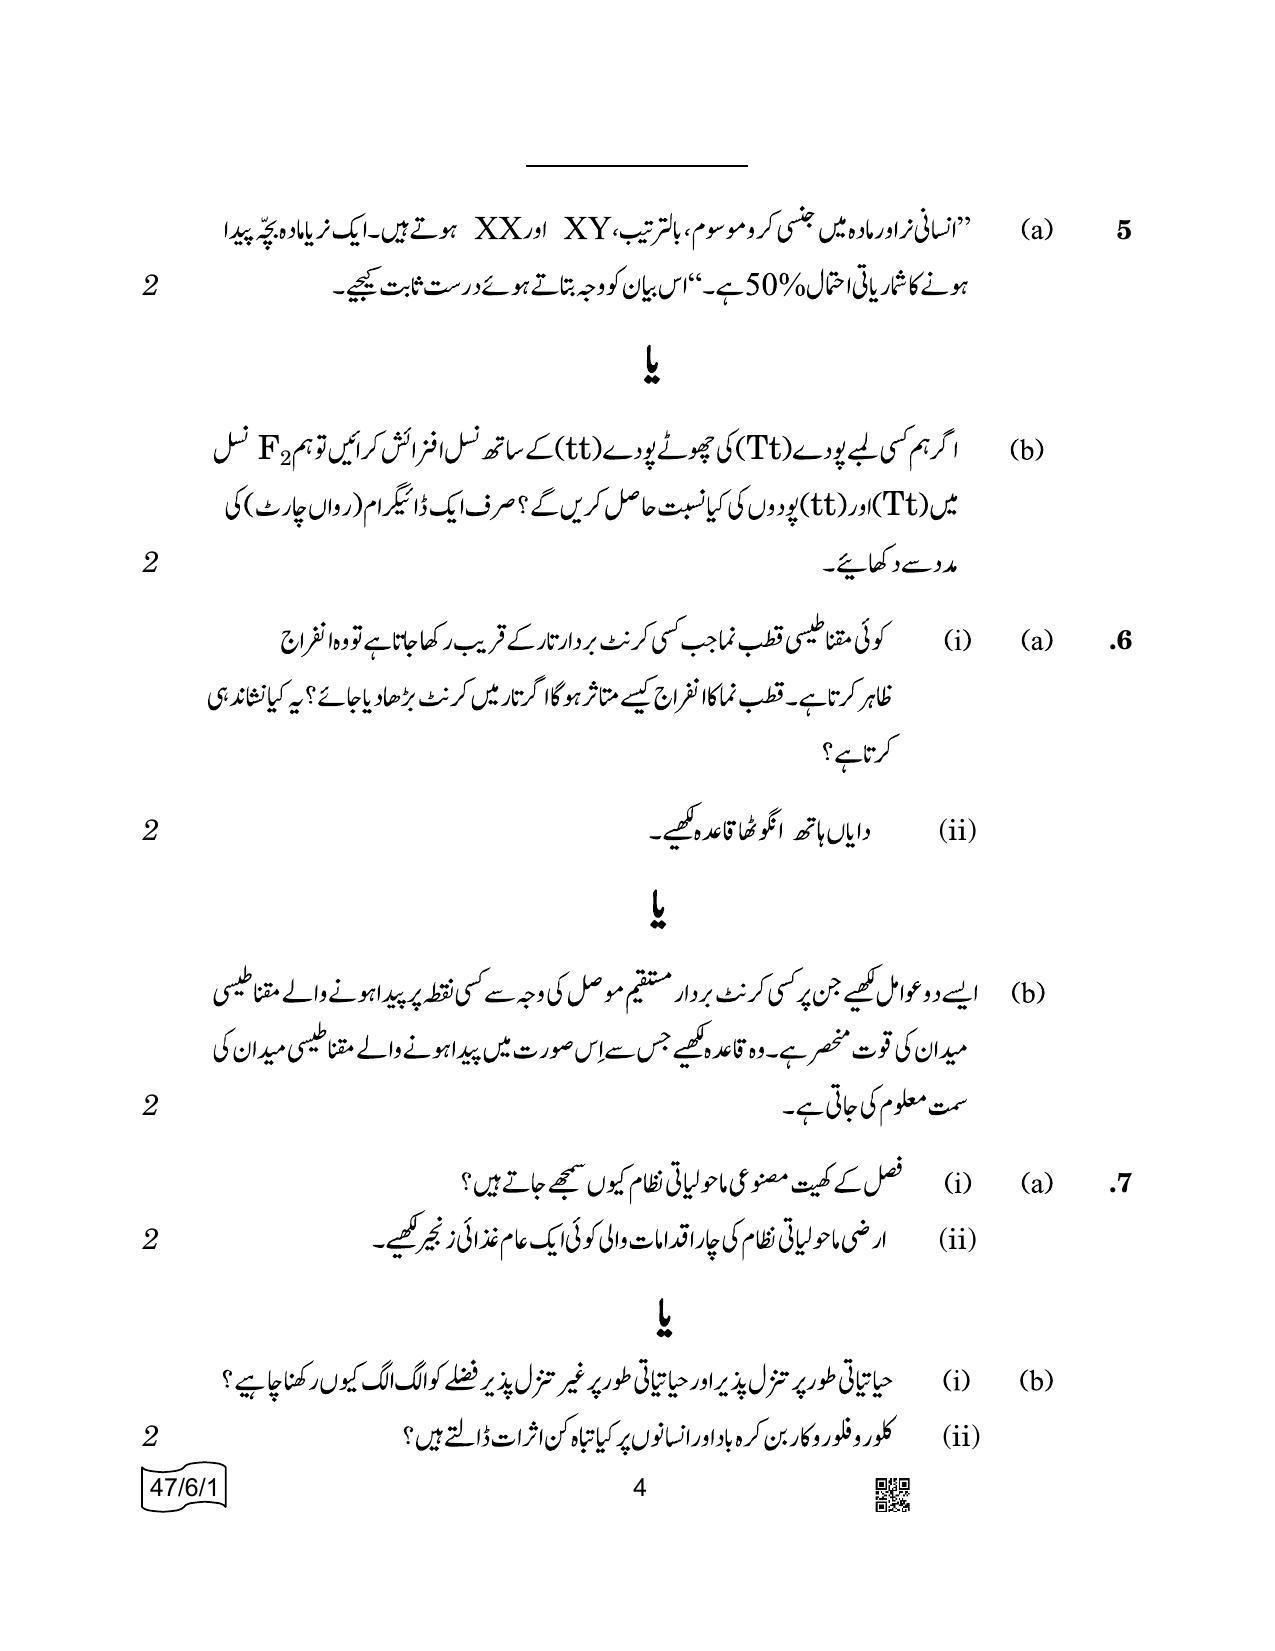 CBSE Class 10 47-6-1 SCIENCE Urdu 2022 Compartment Question Paper - Page 4